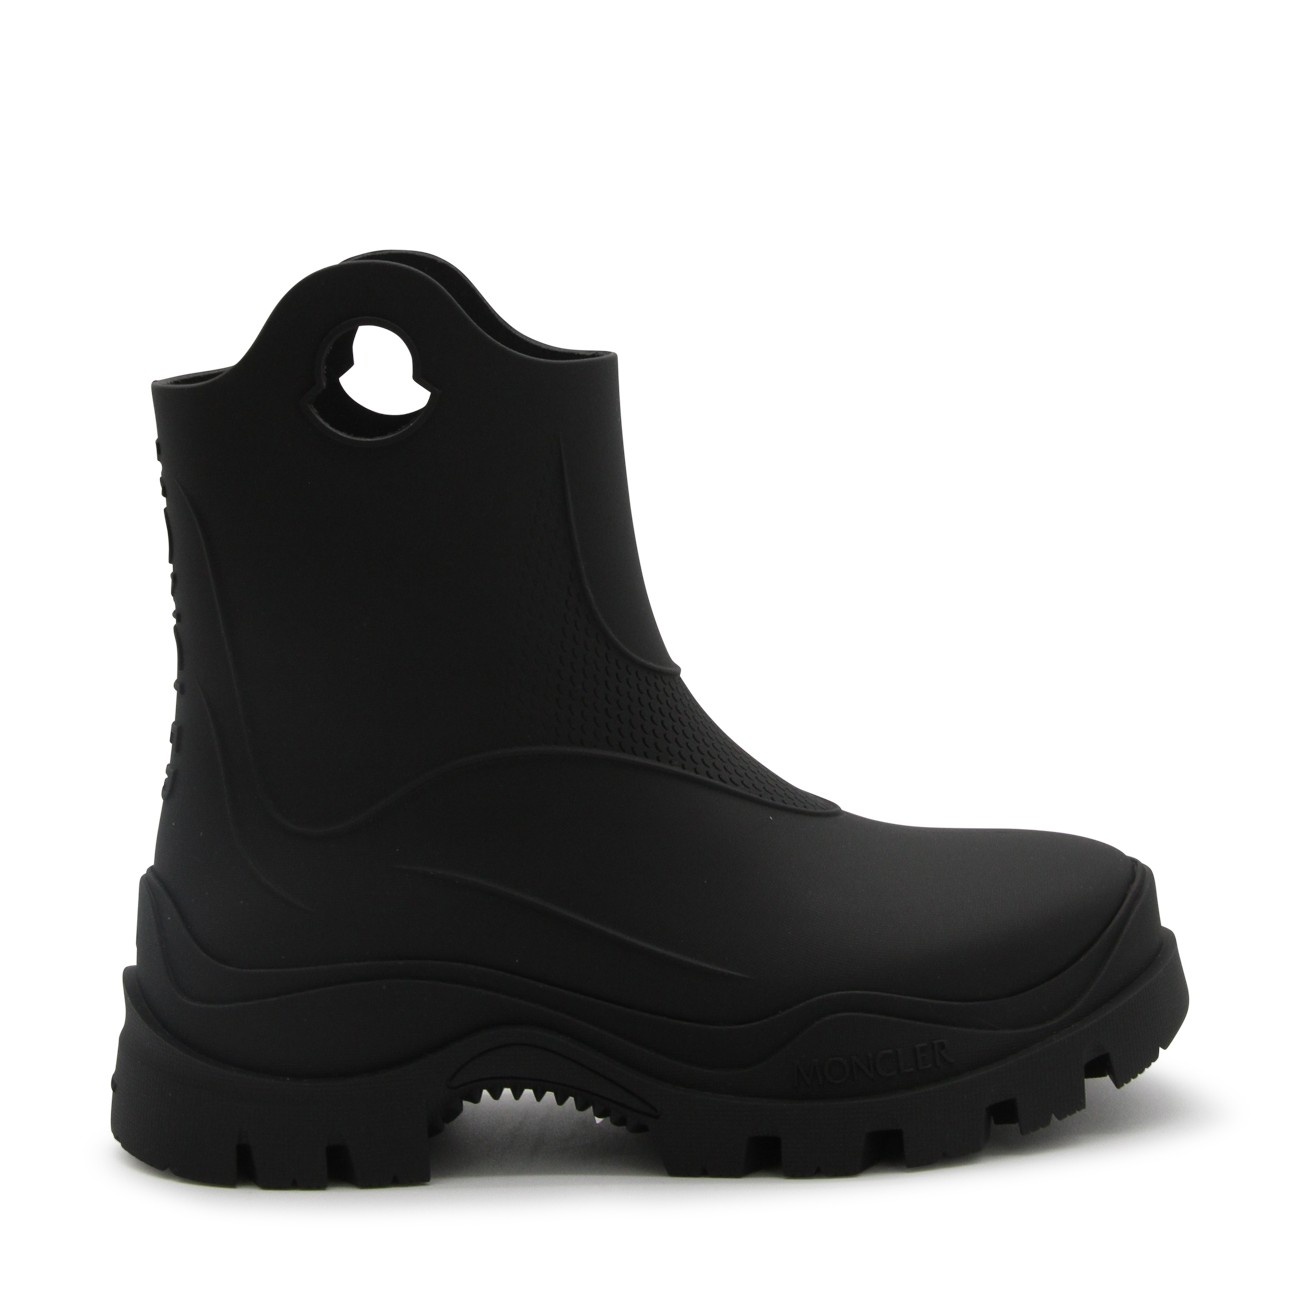 black rainy boots - 1